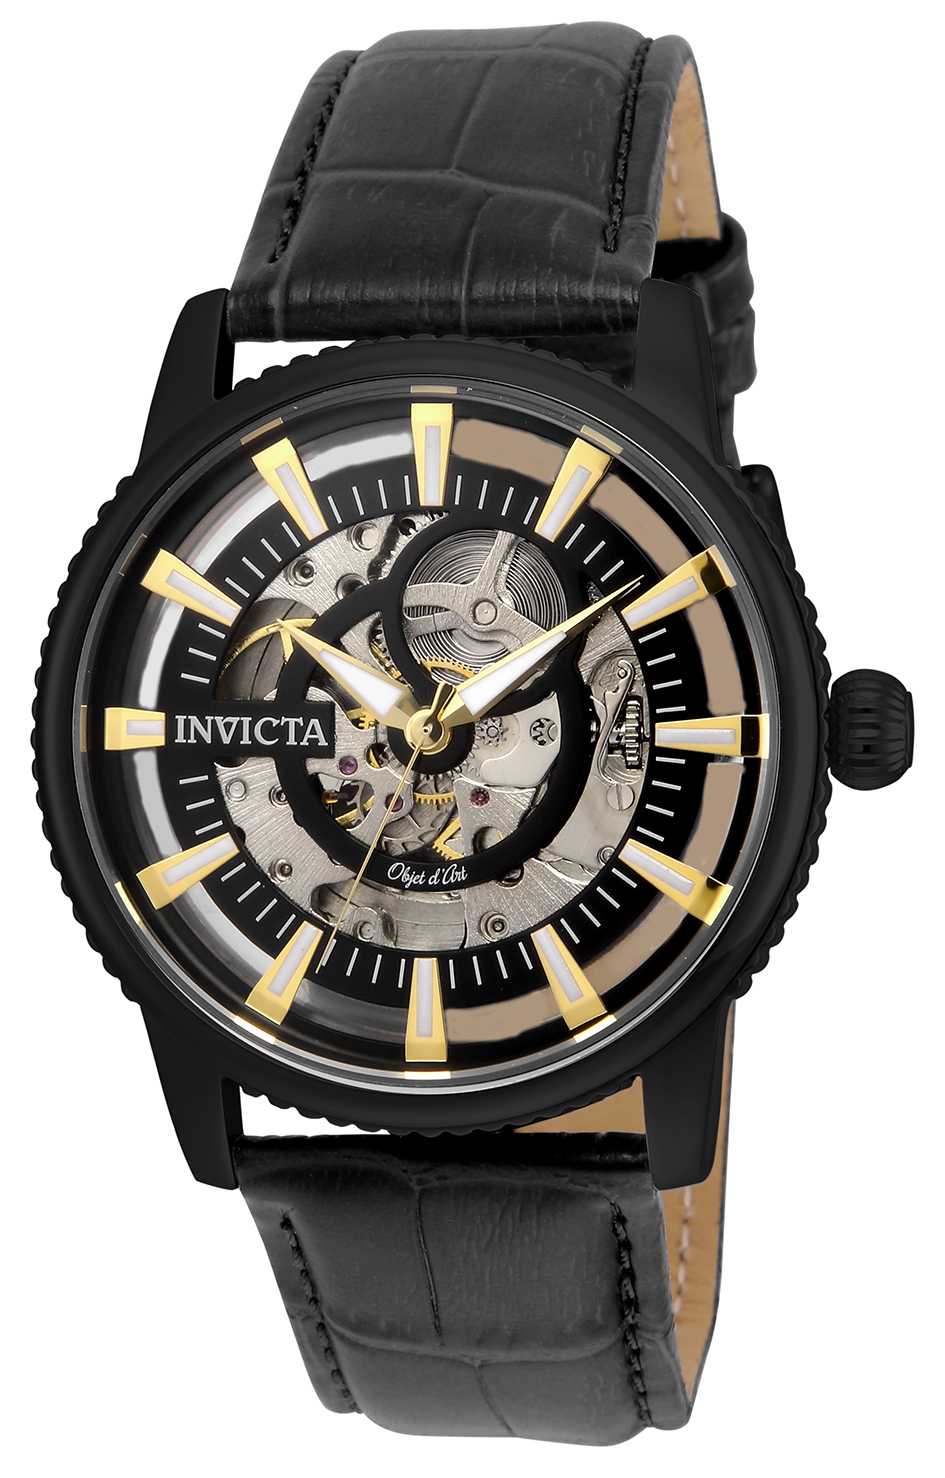 Invicta Objet D Art Automatic Men's Watch - 42mm, Black (22645)